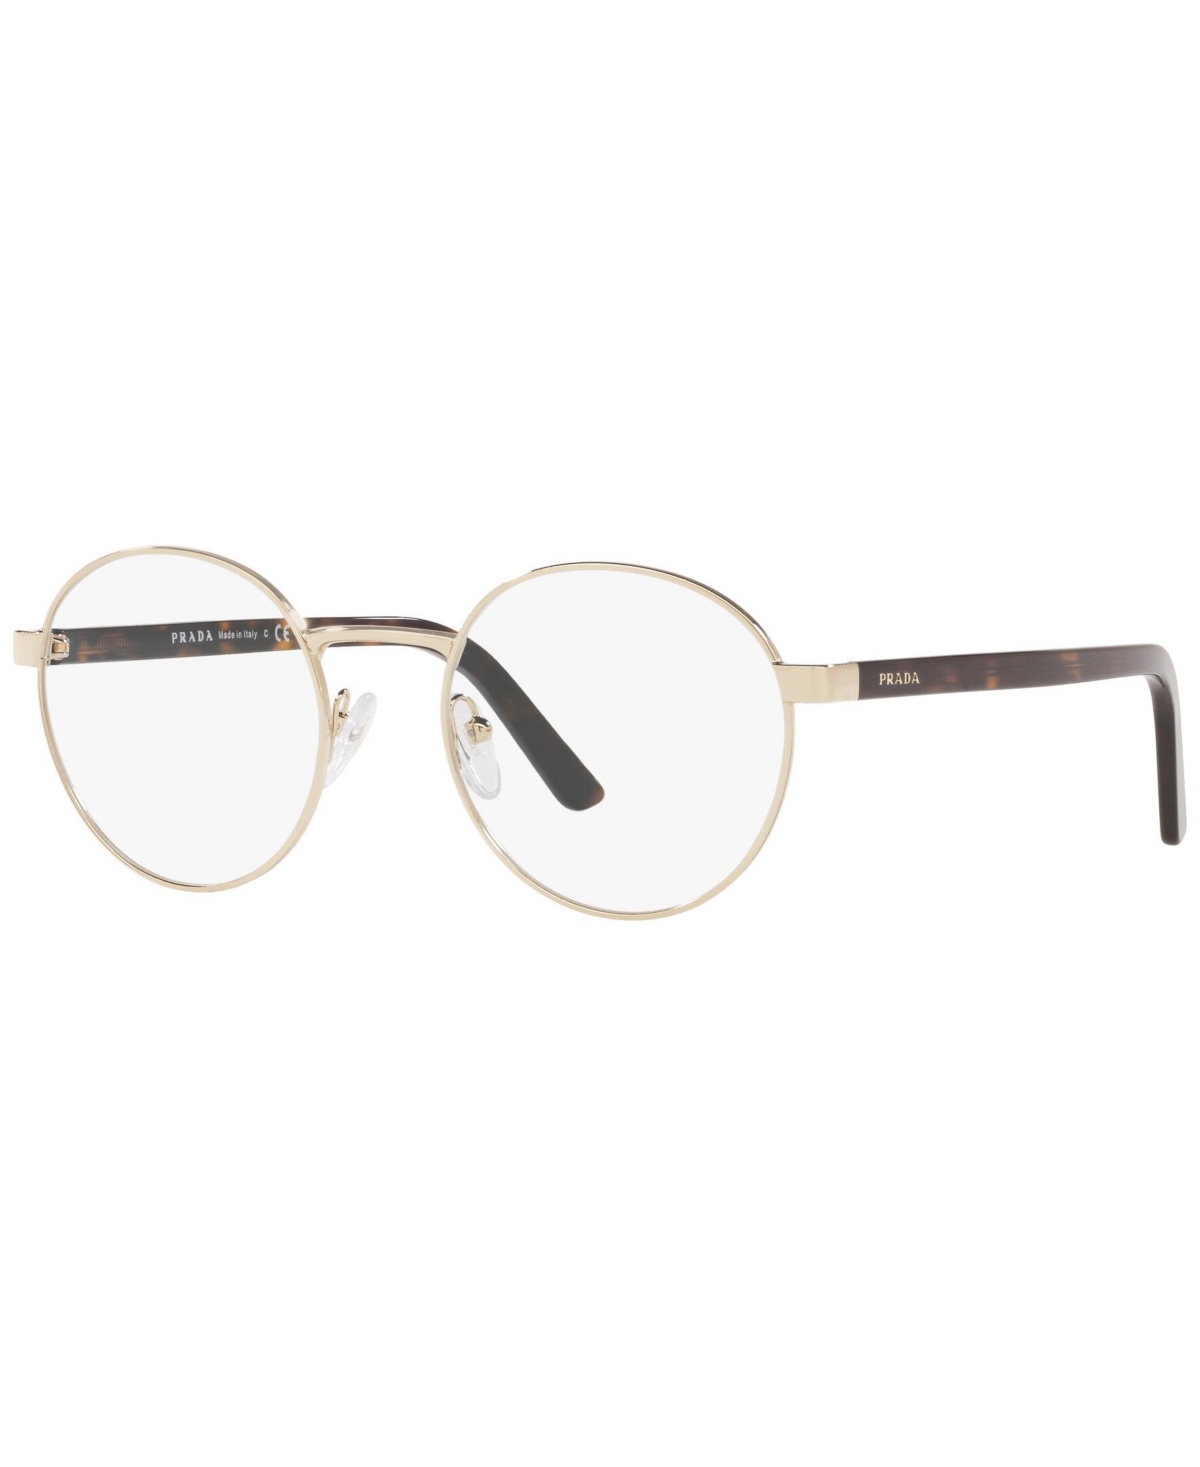 Pr 52XV Women's Round Eyeglasses - Gold-Tone